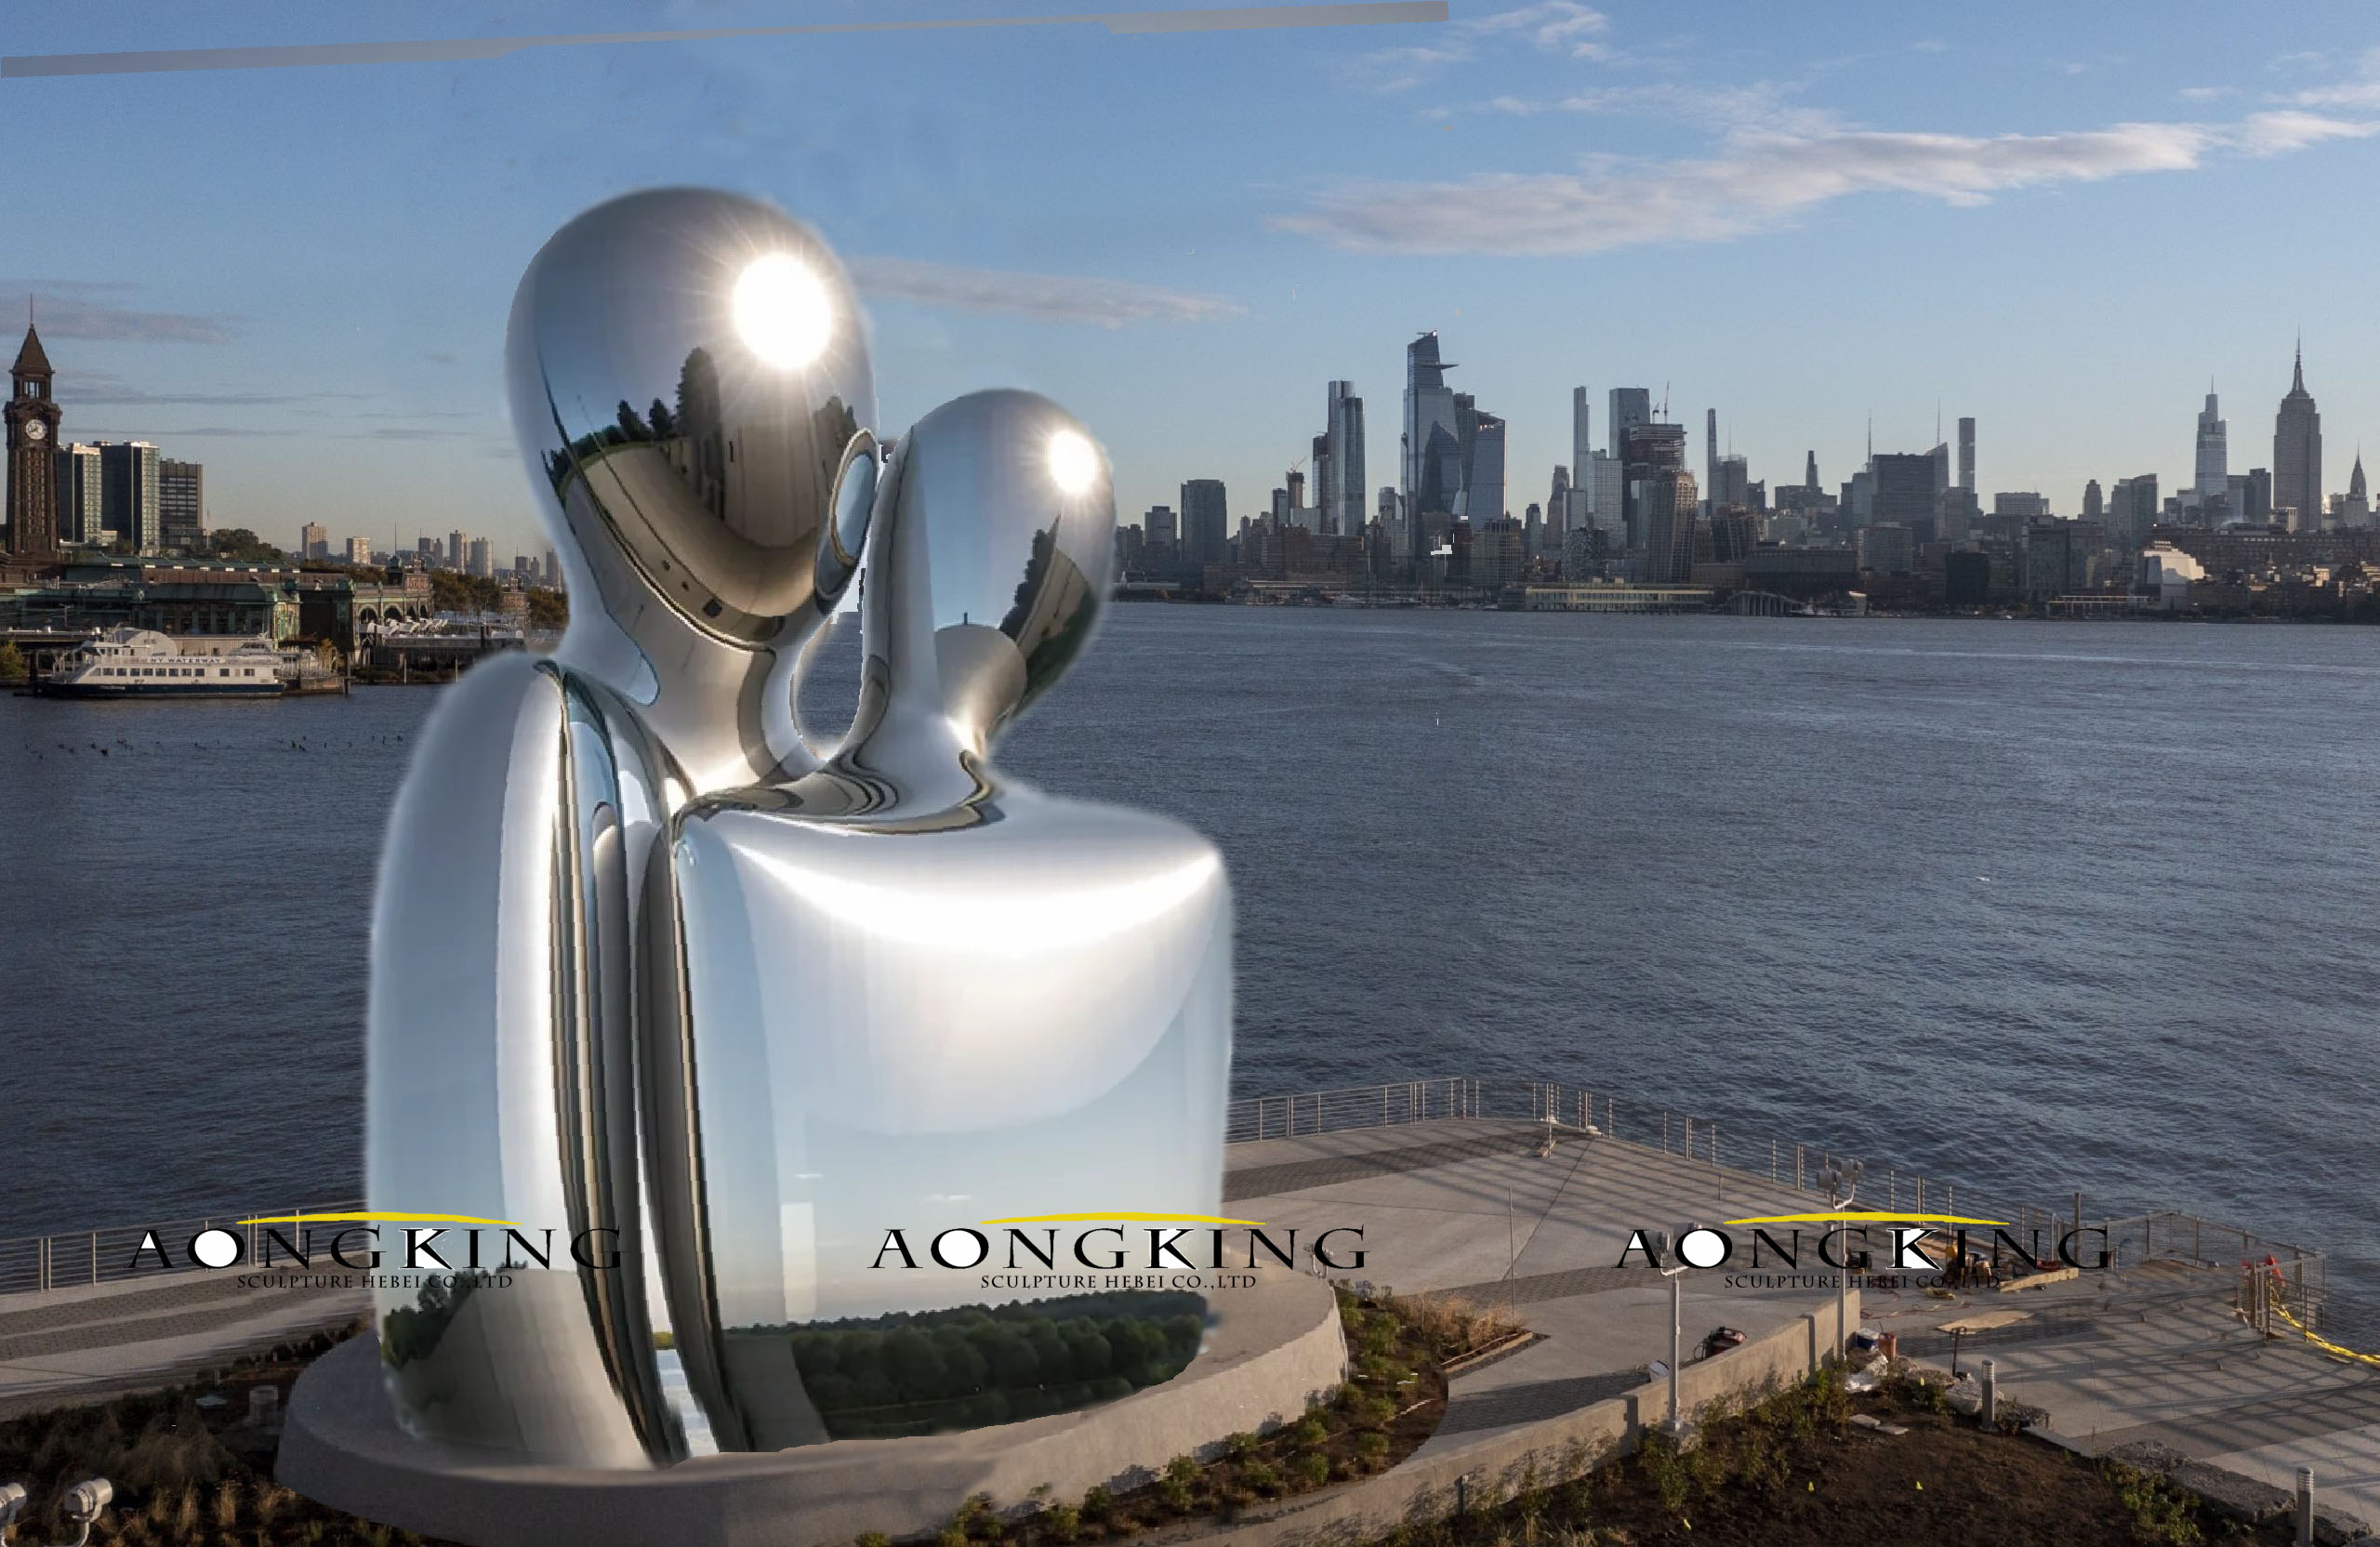 Publick sculpture, stainless steel sculpture